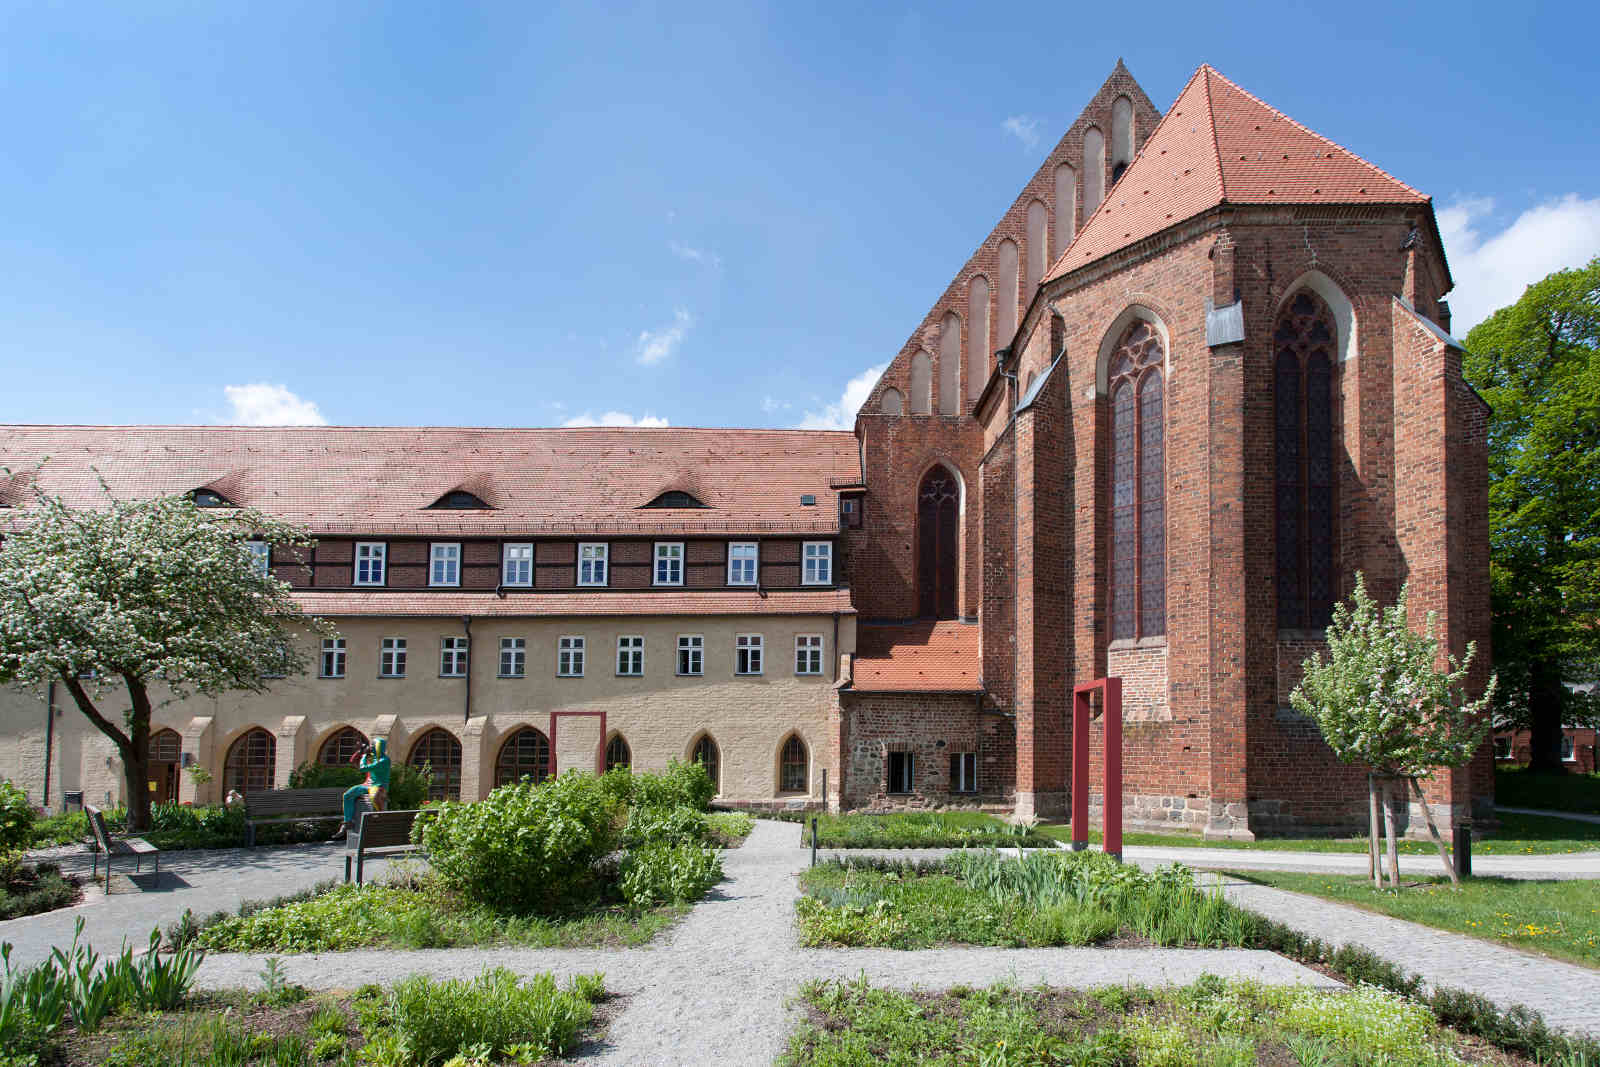 Dominican monastery, Prenzlau